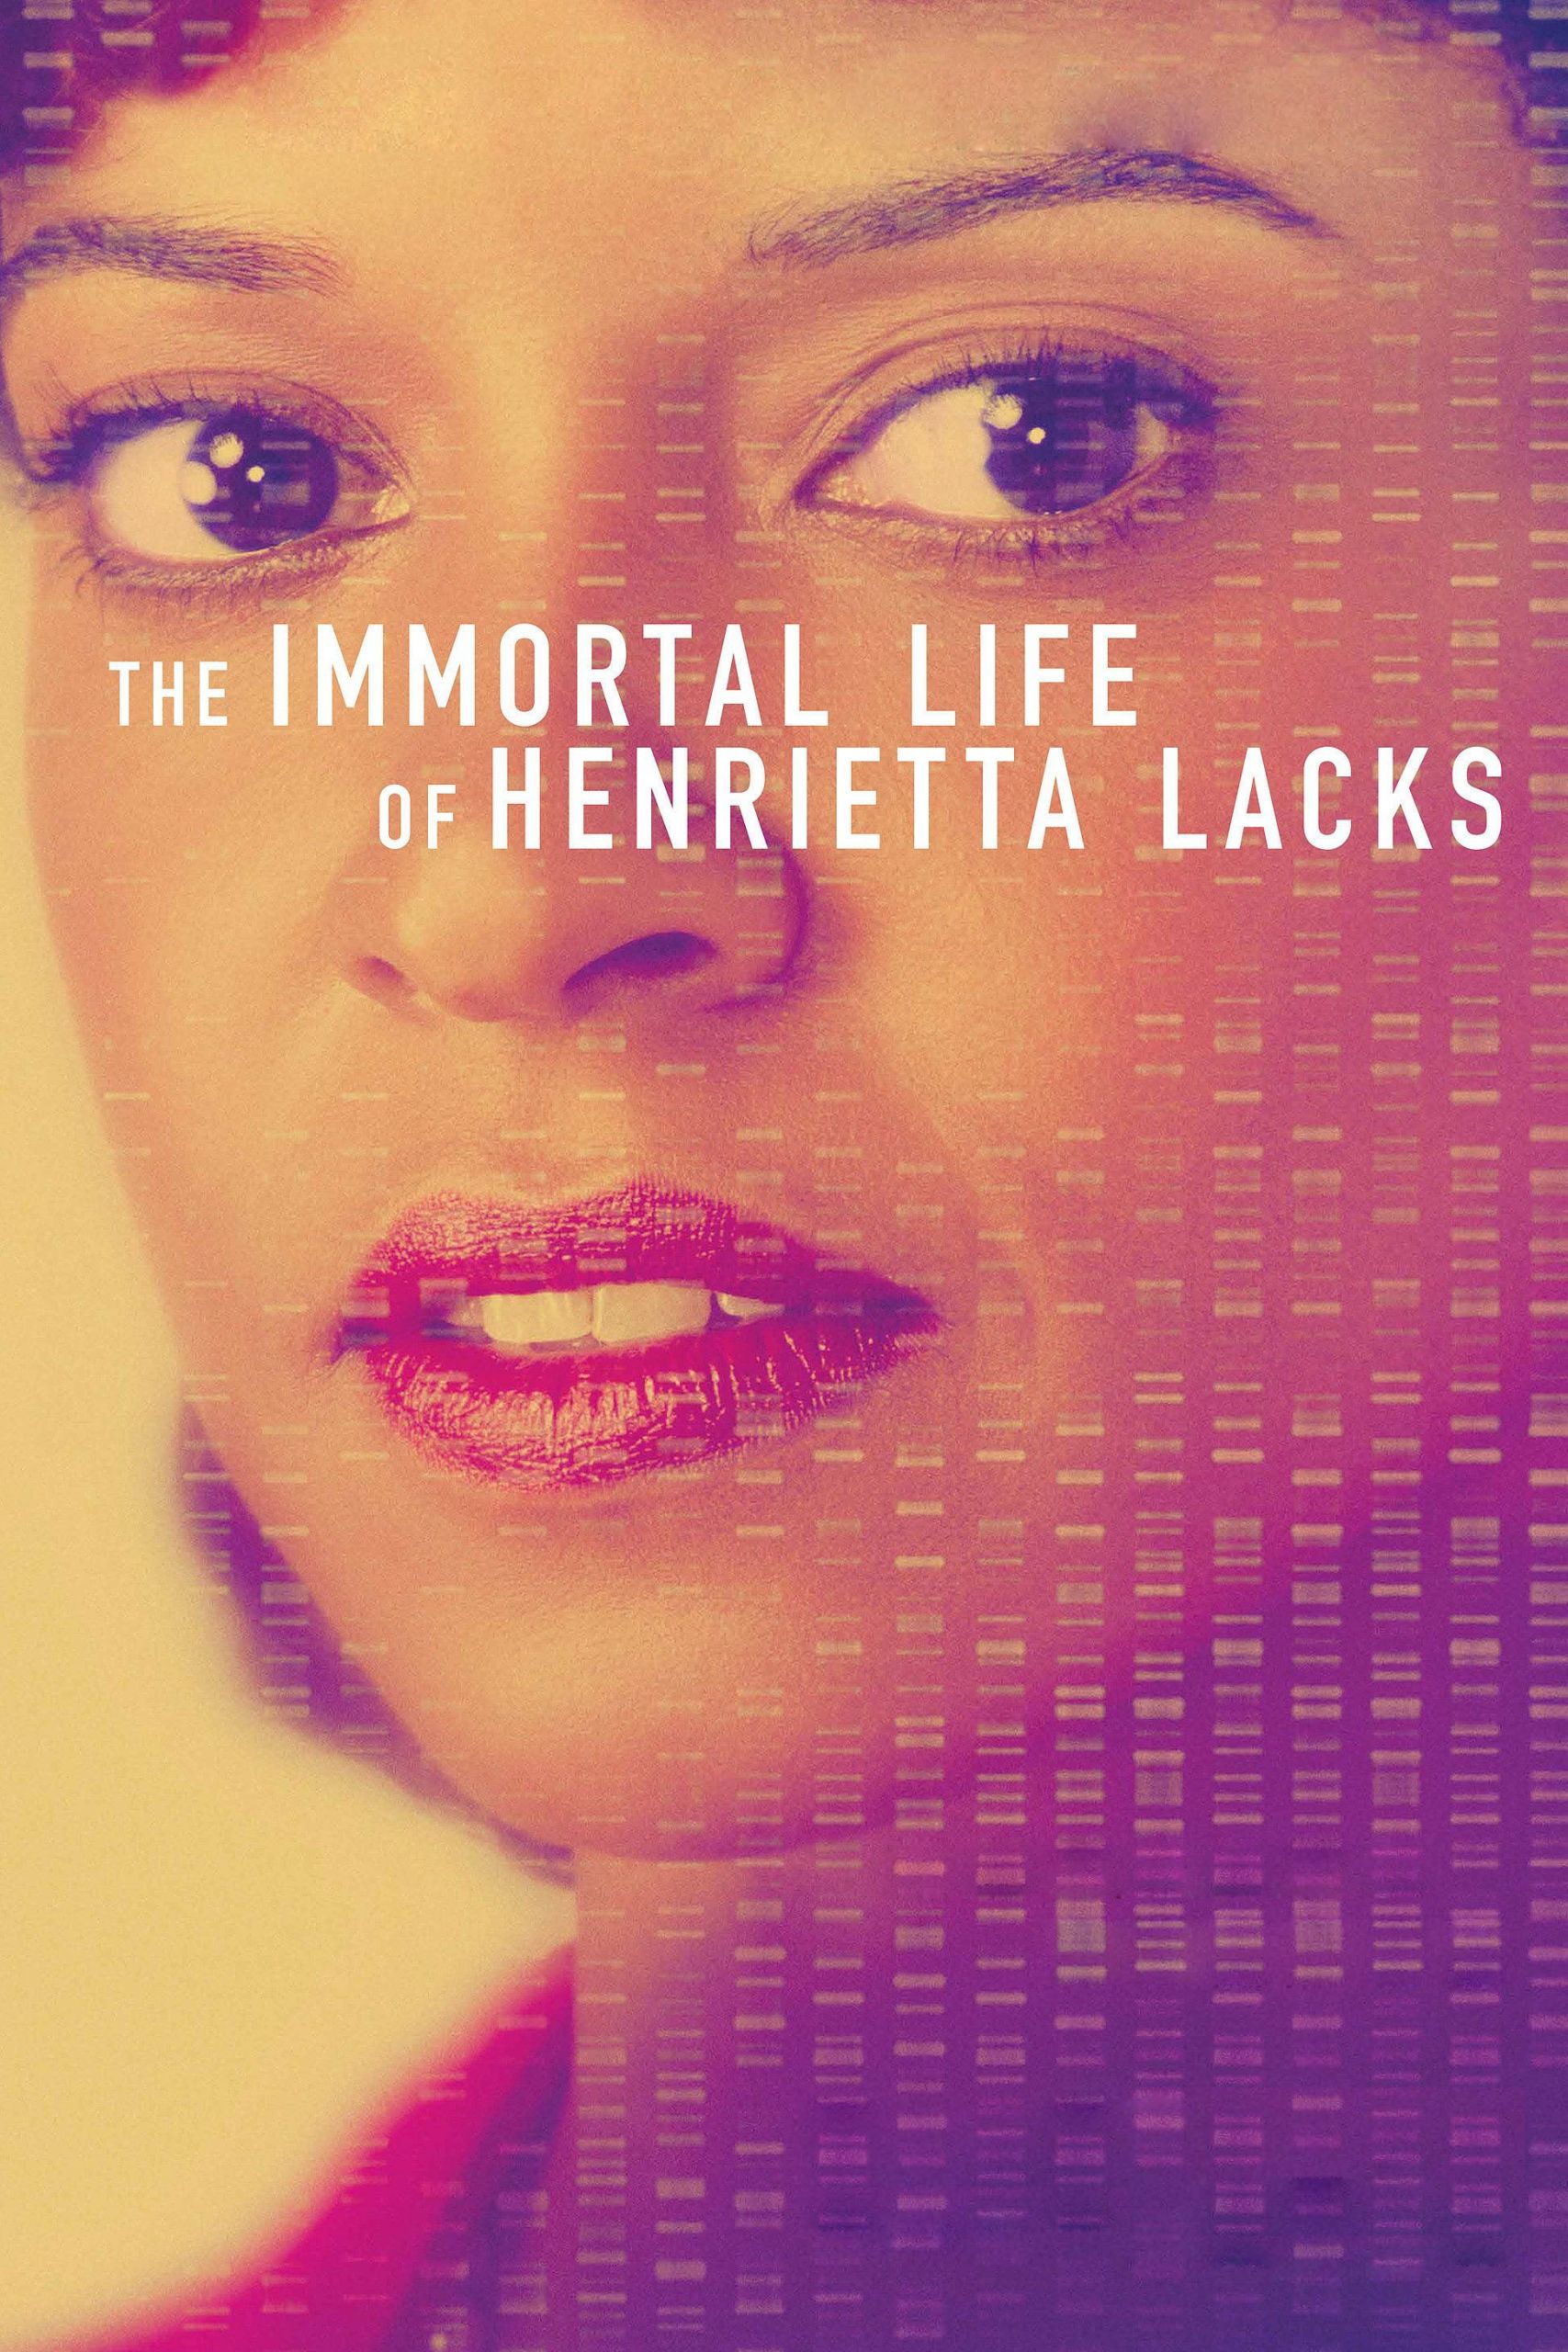 The Immortal Life Of Henrietta Lacks Quotes
 The Immortal Life of Henrietta Lacks 2017 Movie George